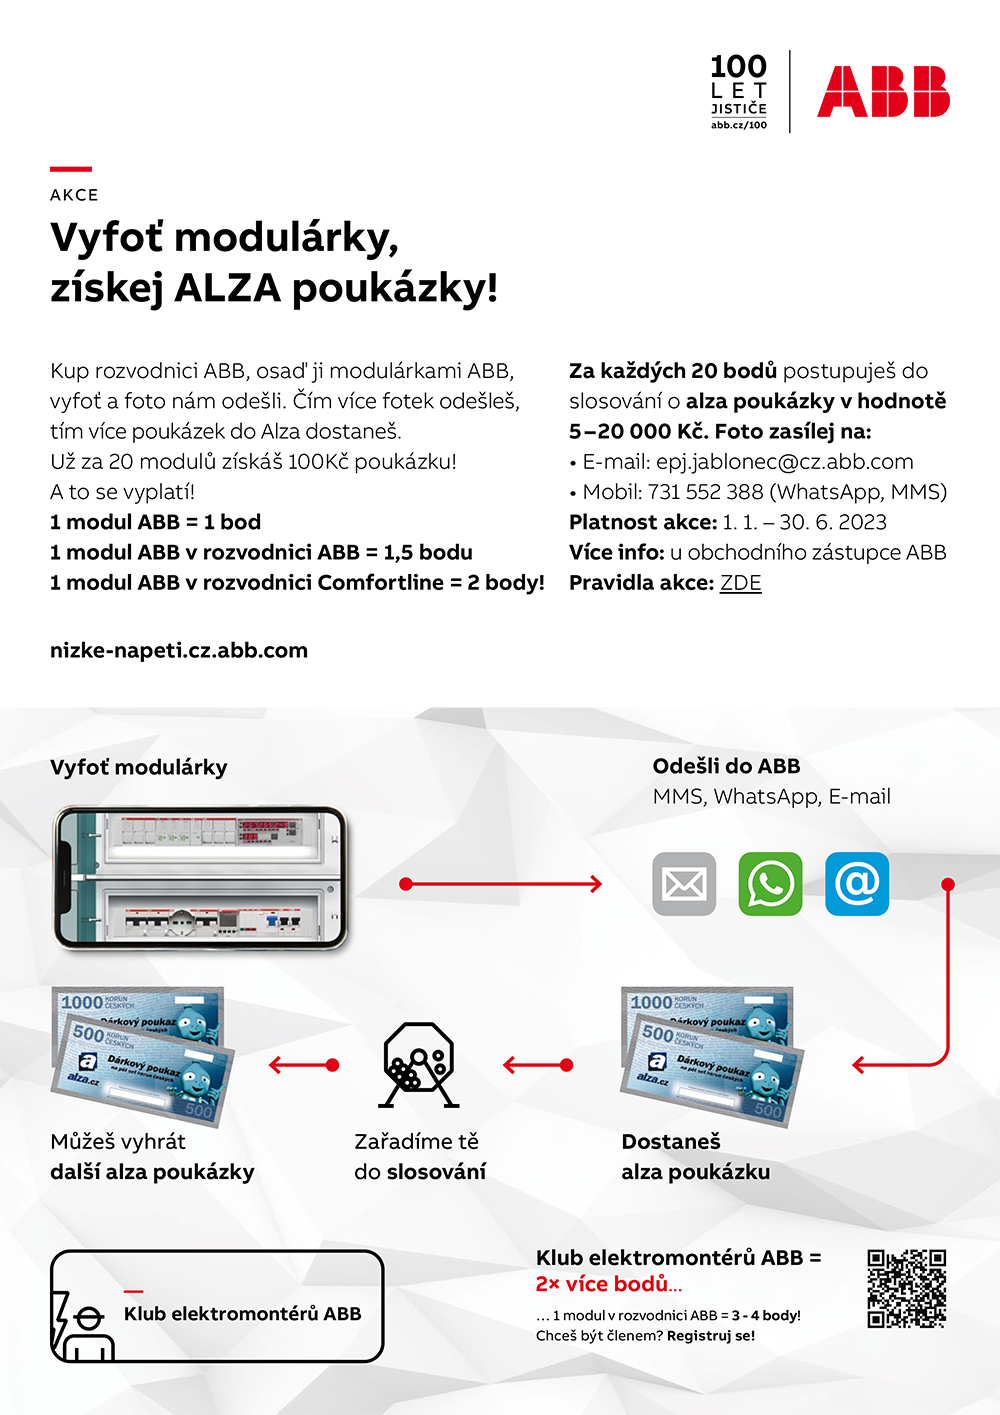 21109-ABB-Inzerce-VO-2023-Vyfot-modularky-6-kolo-A4-ELEKTRONICKY-(1).jpg